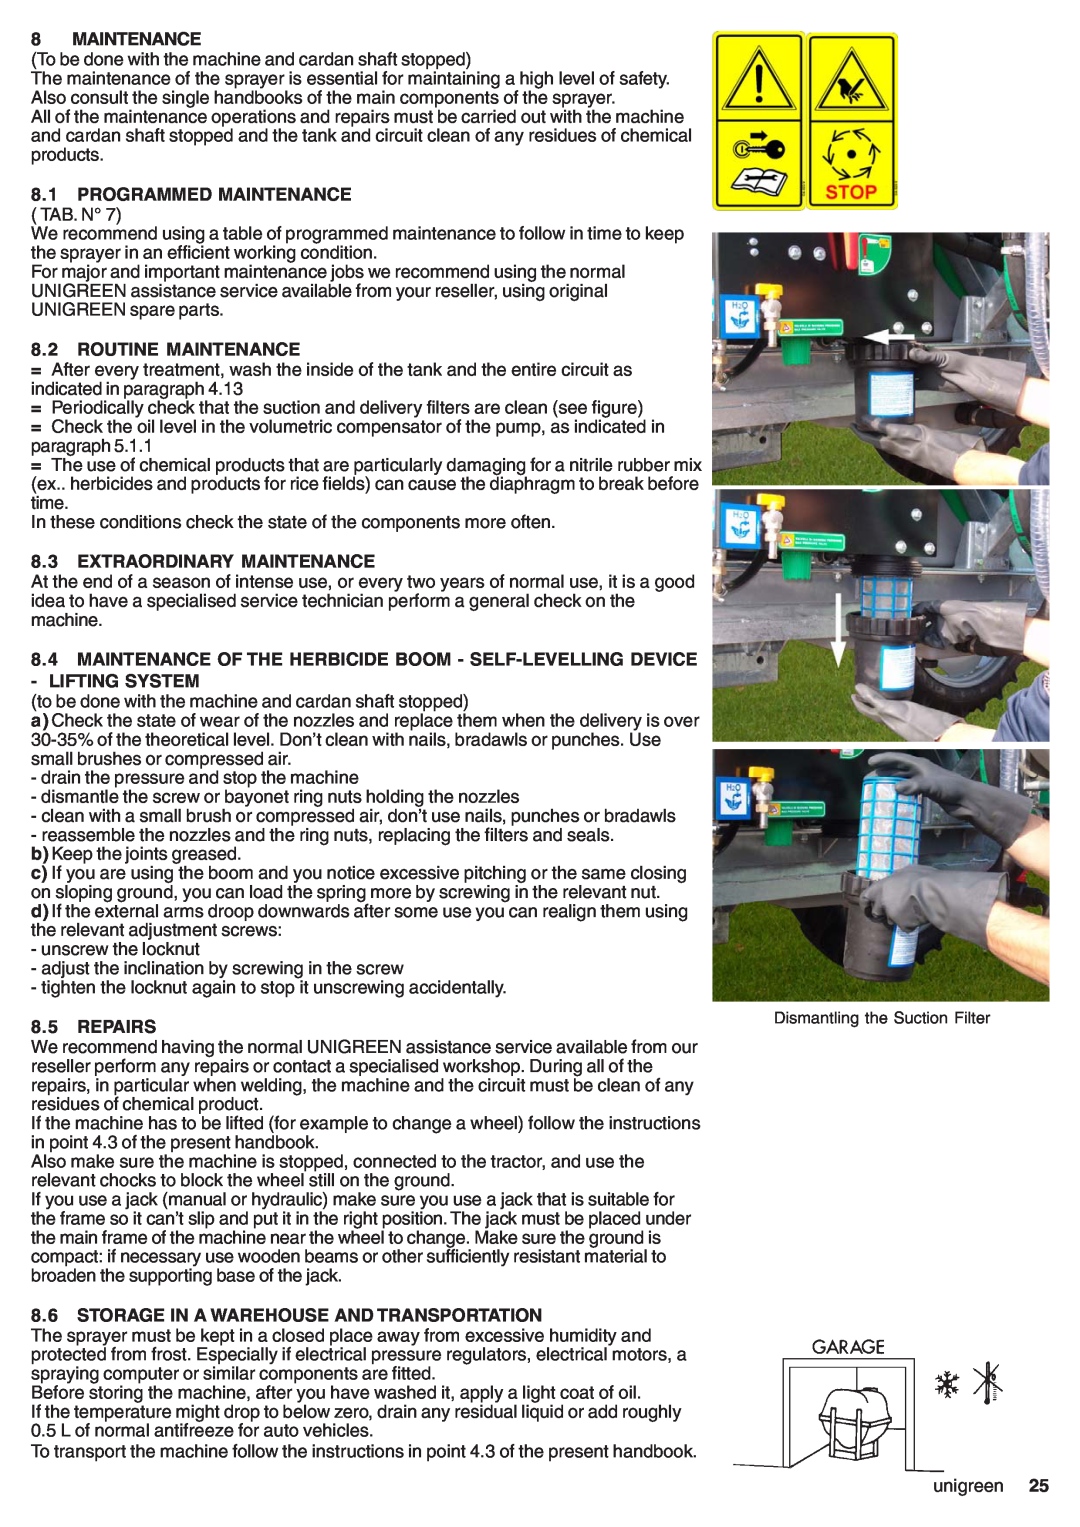 Unigreen CAMPO 11 - 16 - 22 - 32 manual Programmed Maintenance Tab. N, Routine Maintenance, Extraordinary Maintenance 